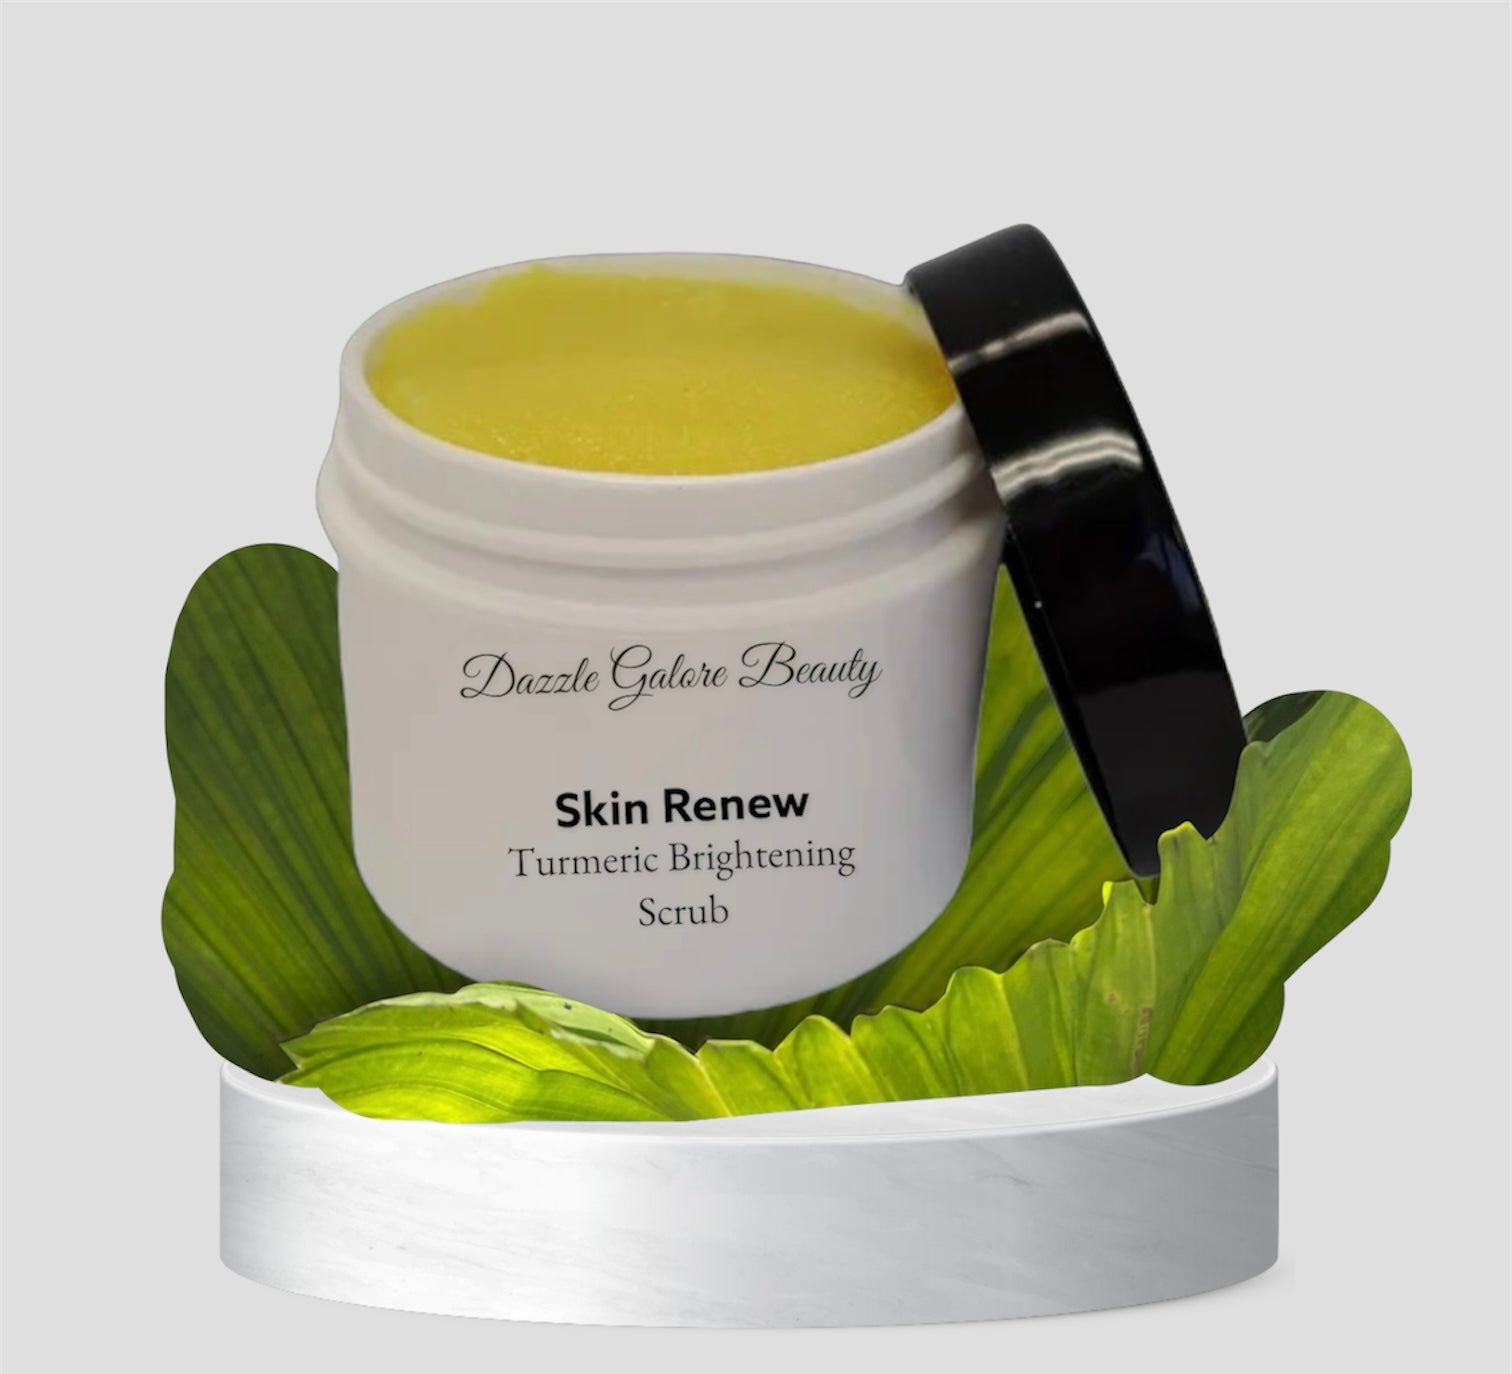 “Skin Renew” Turmeric brightening skin scrub